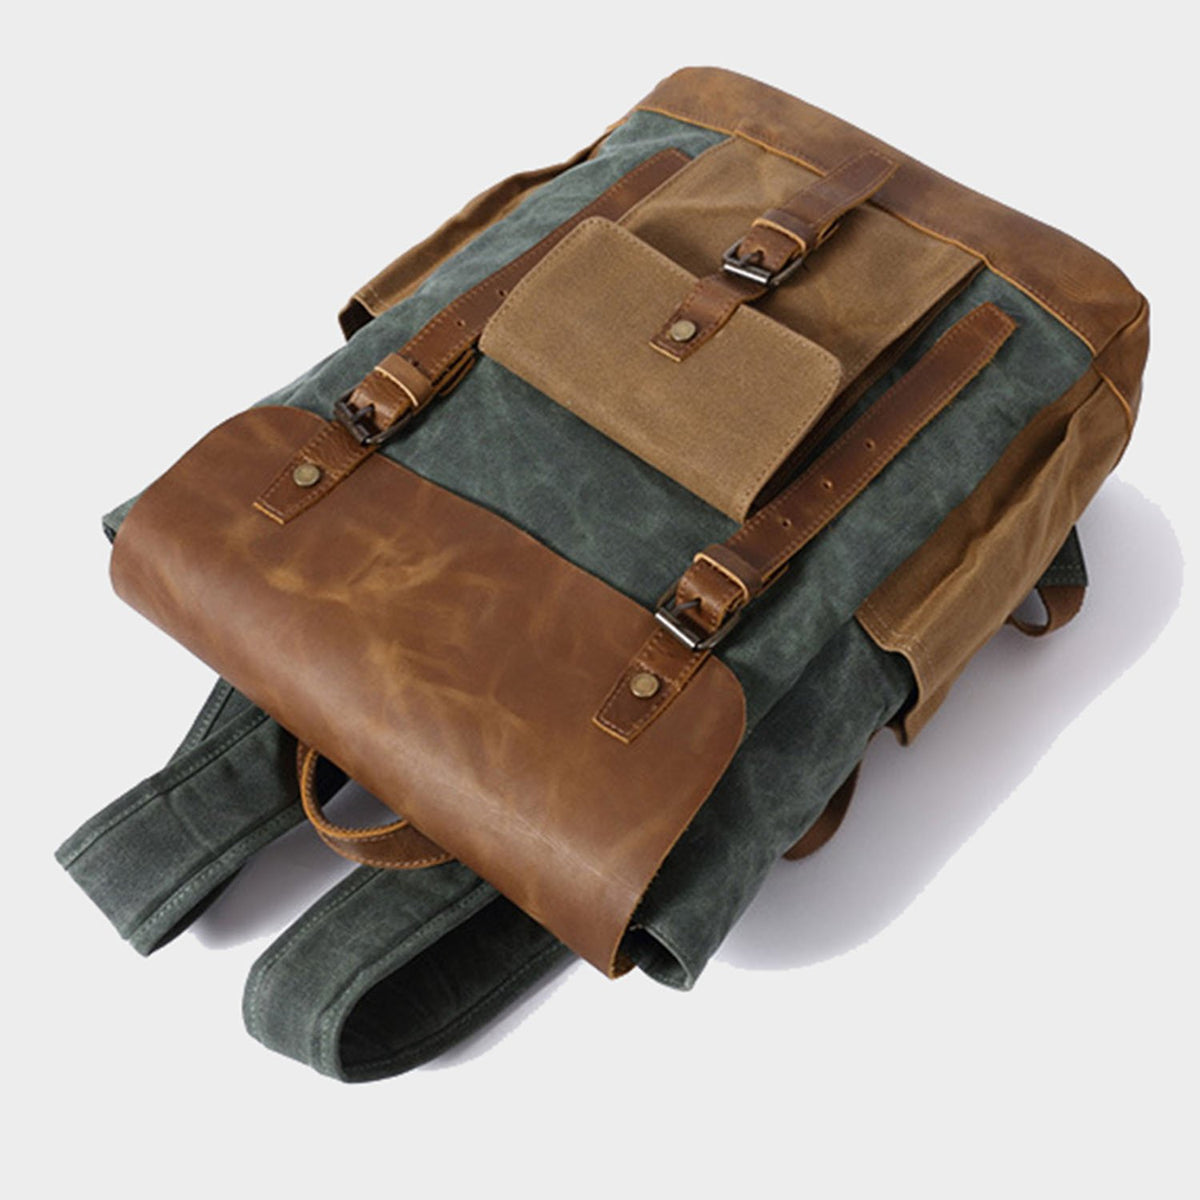 Jonny Ruzzo — Shop — Handmade Canvas Backpack - Caramel with Navy Rubber  Coating